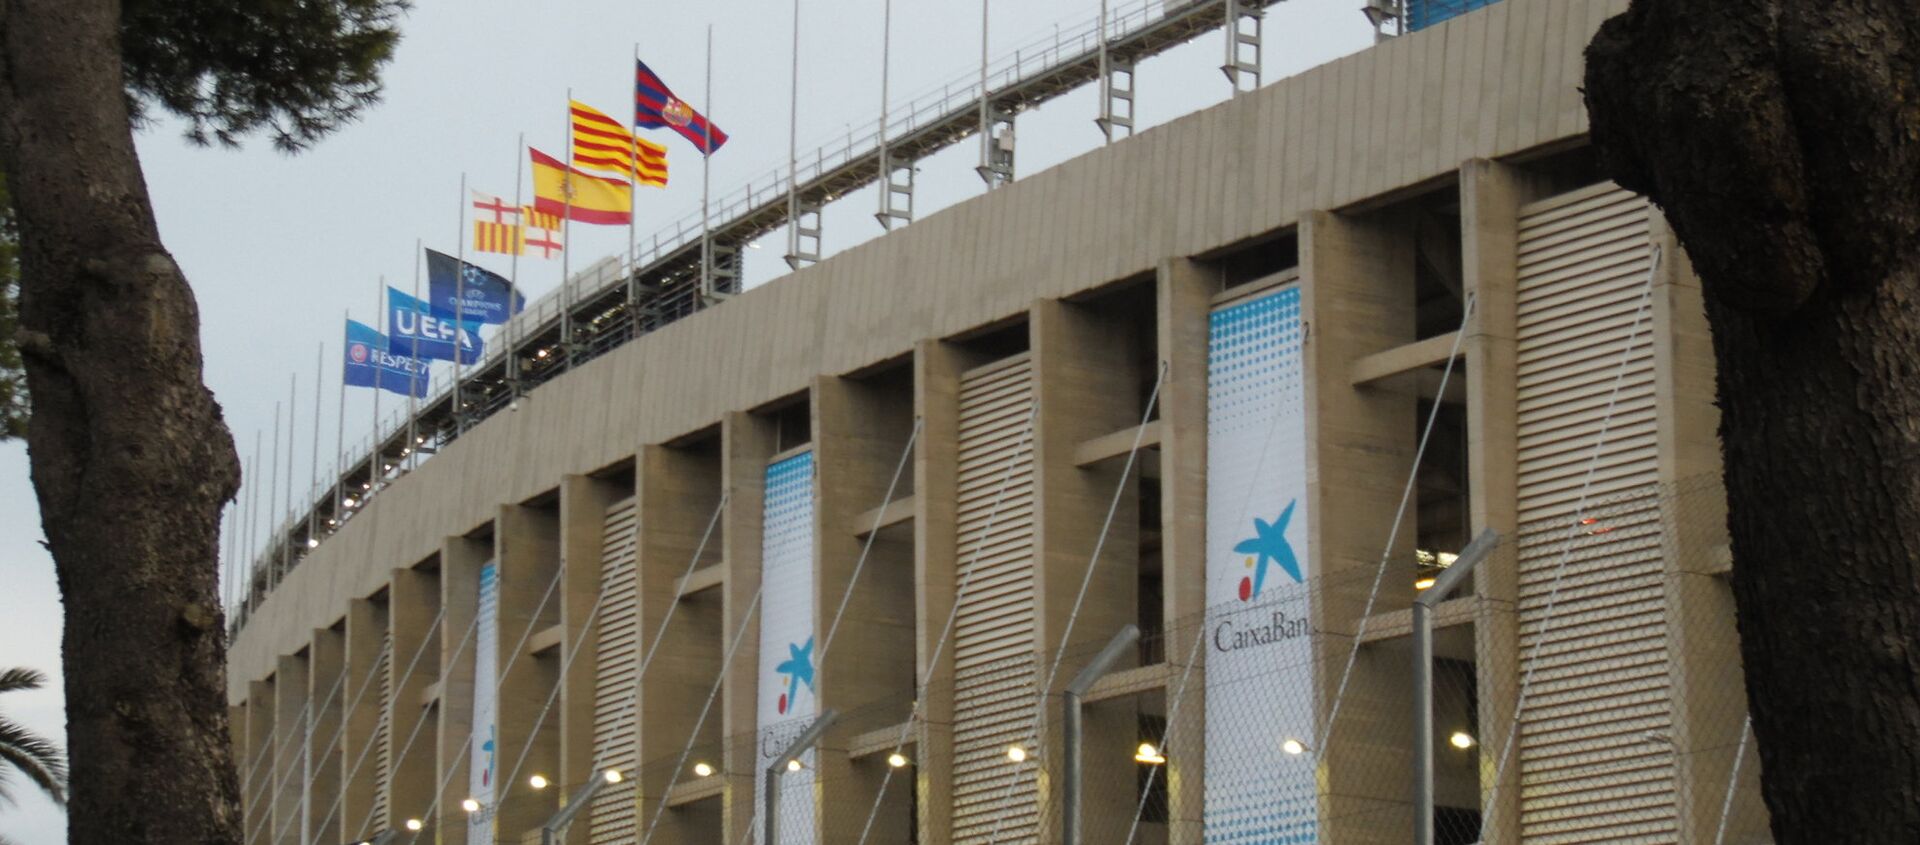 El estadio Camp Nou, Barcelona - Sputnik Mundo, 1920, 01.08.2018